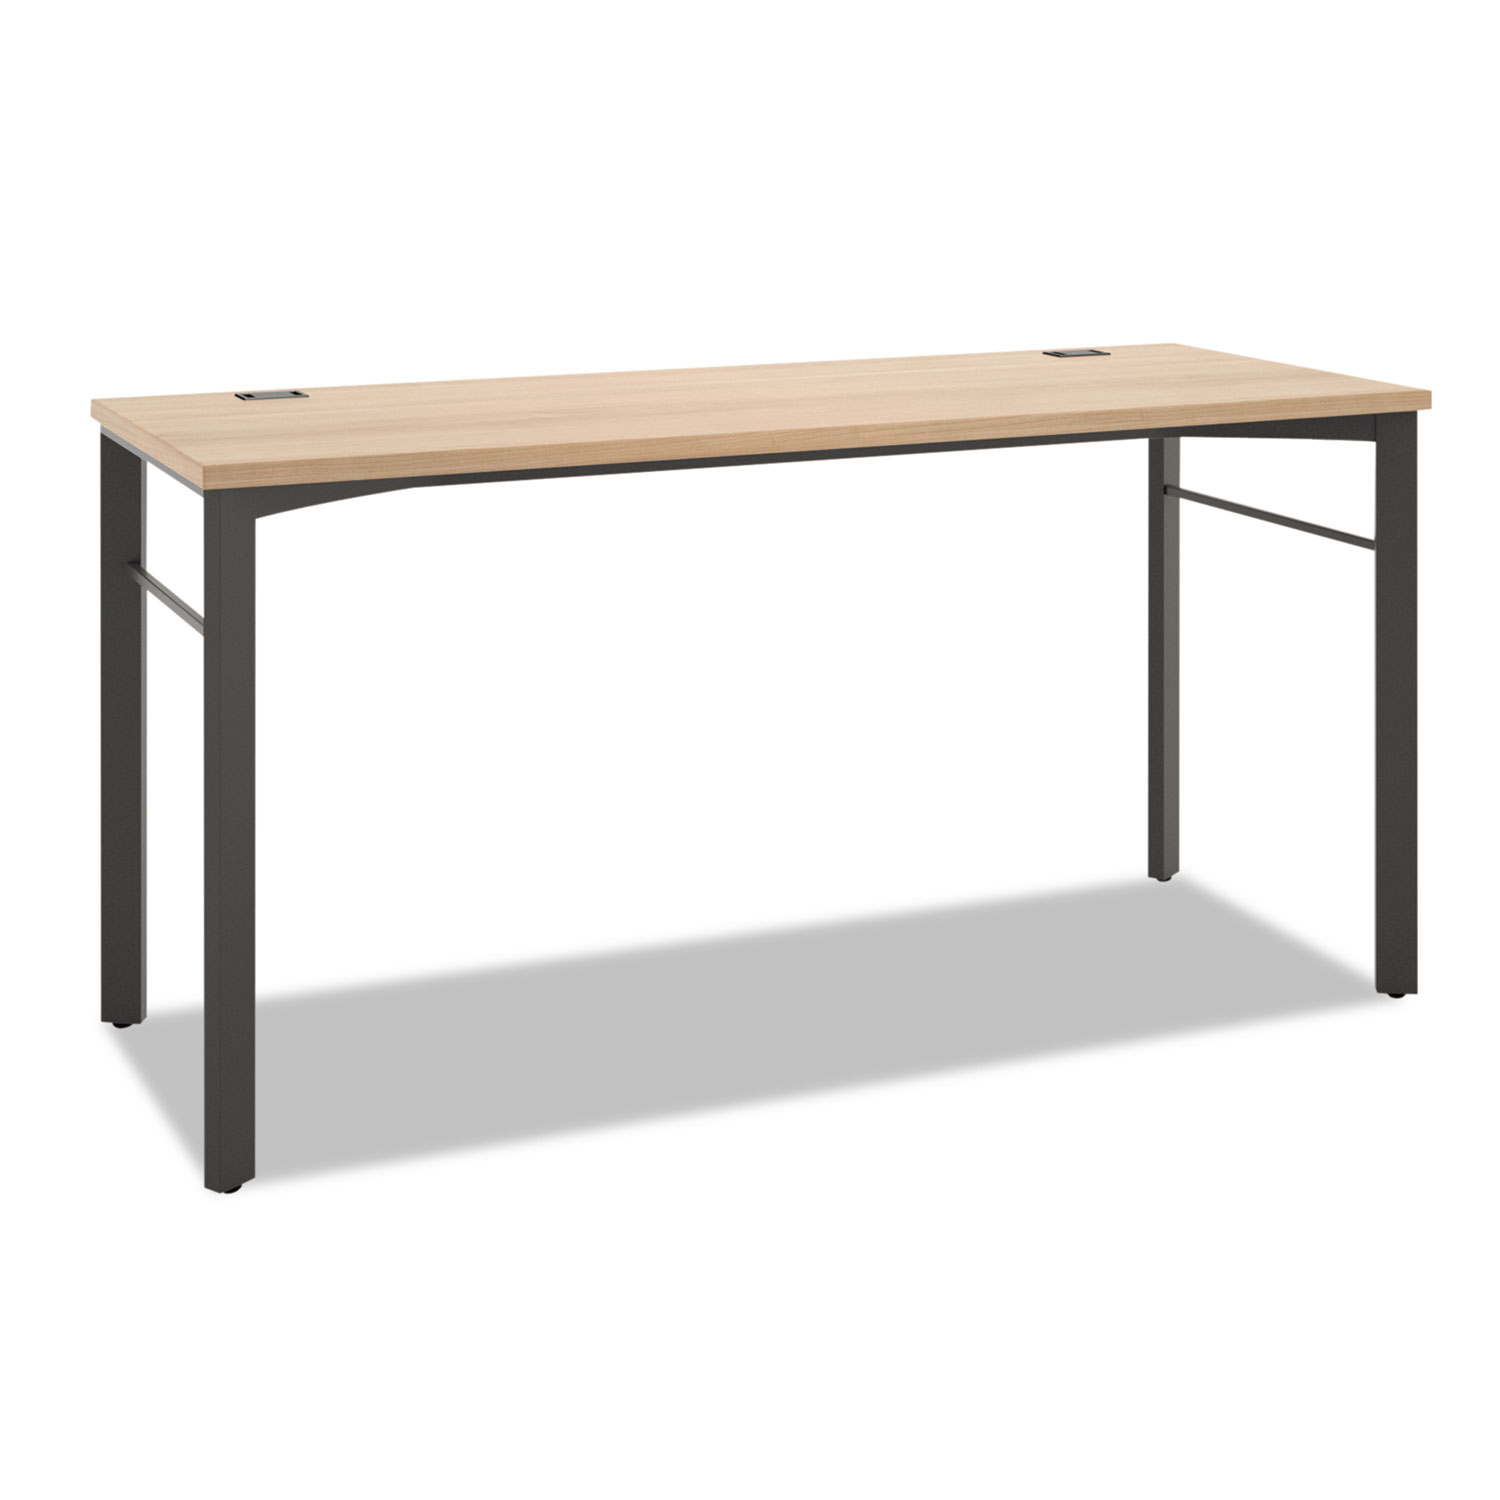  HON BSXMLD60W Manage Series Desk Table, 60w x 23.5d x 29.5h, Wheat (BSXMLD60W) 